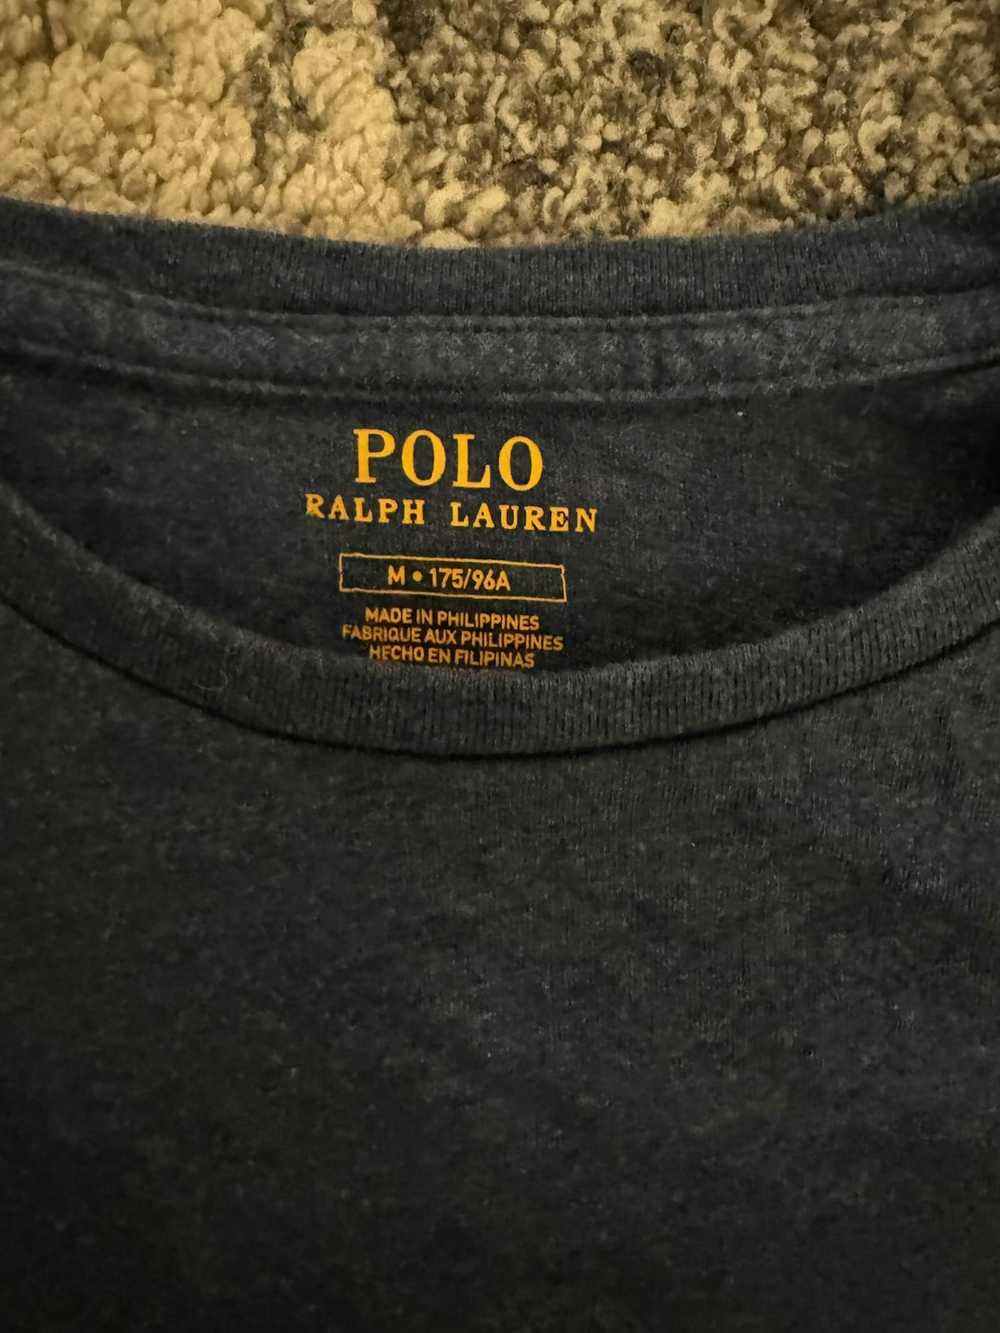 Polo Ralph Lauren Polo bear football shirt - image 3